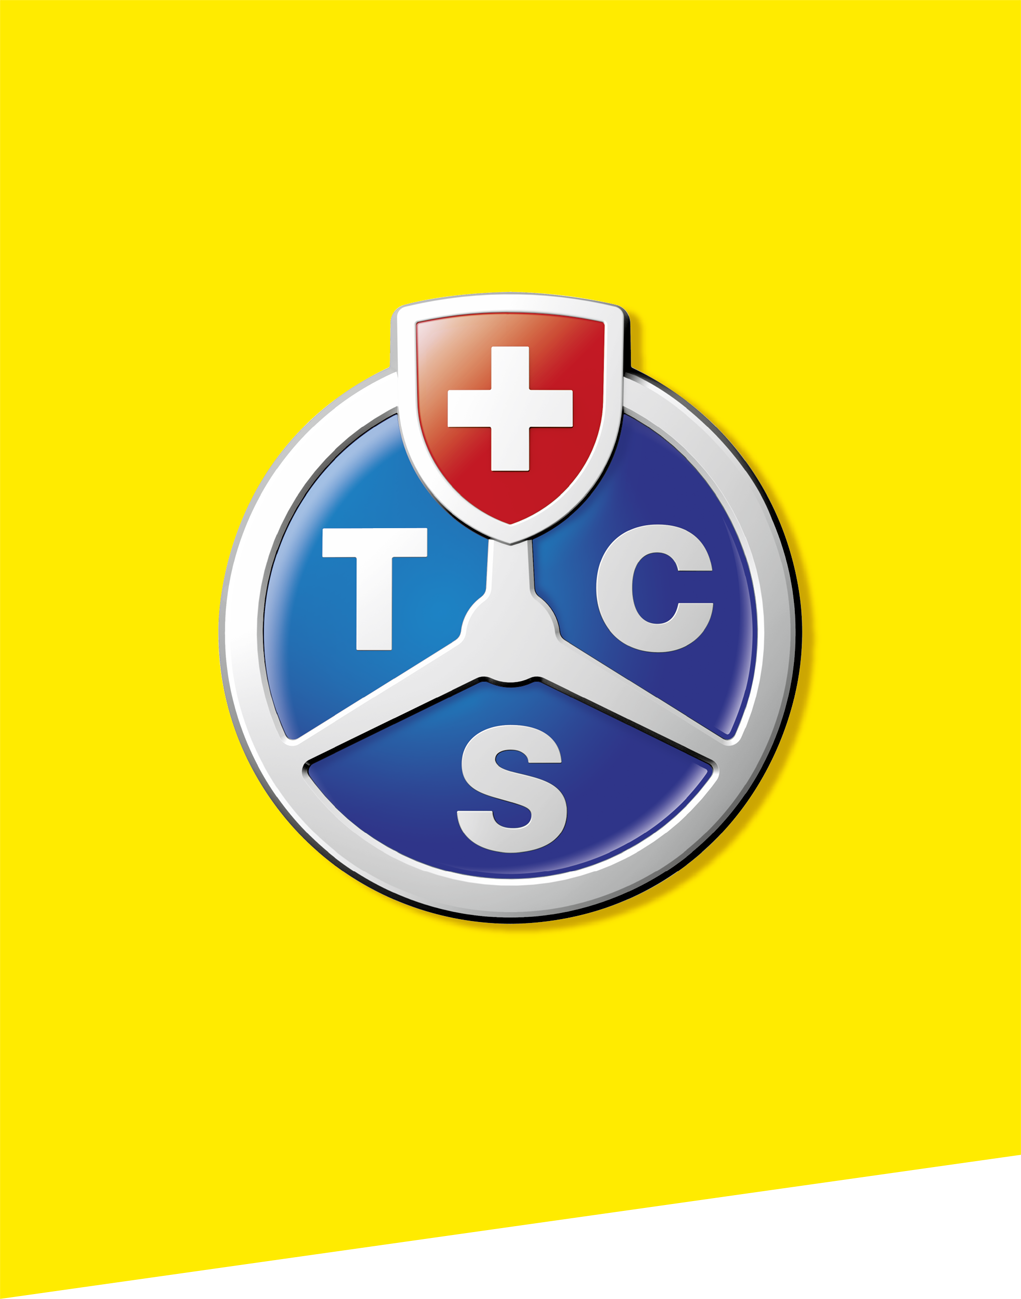 Logo TCS 